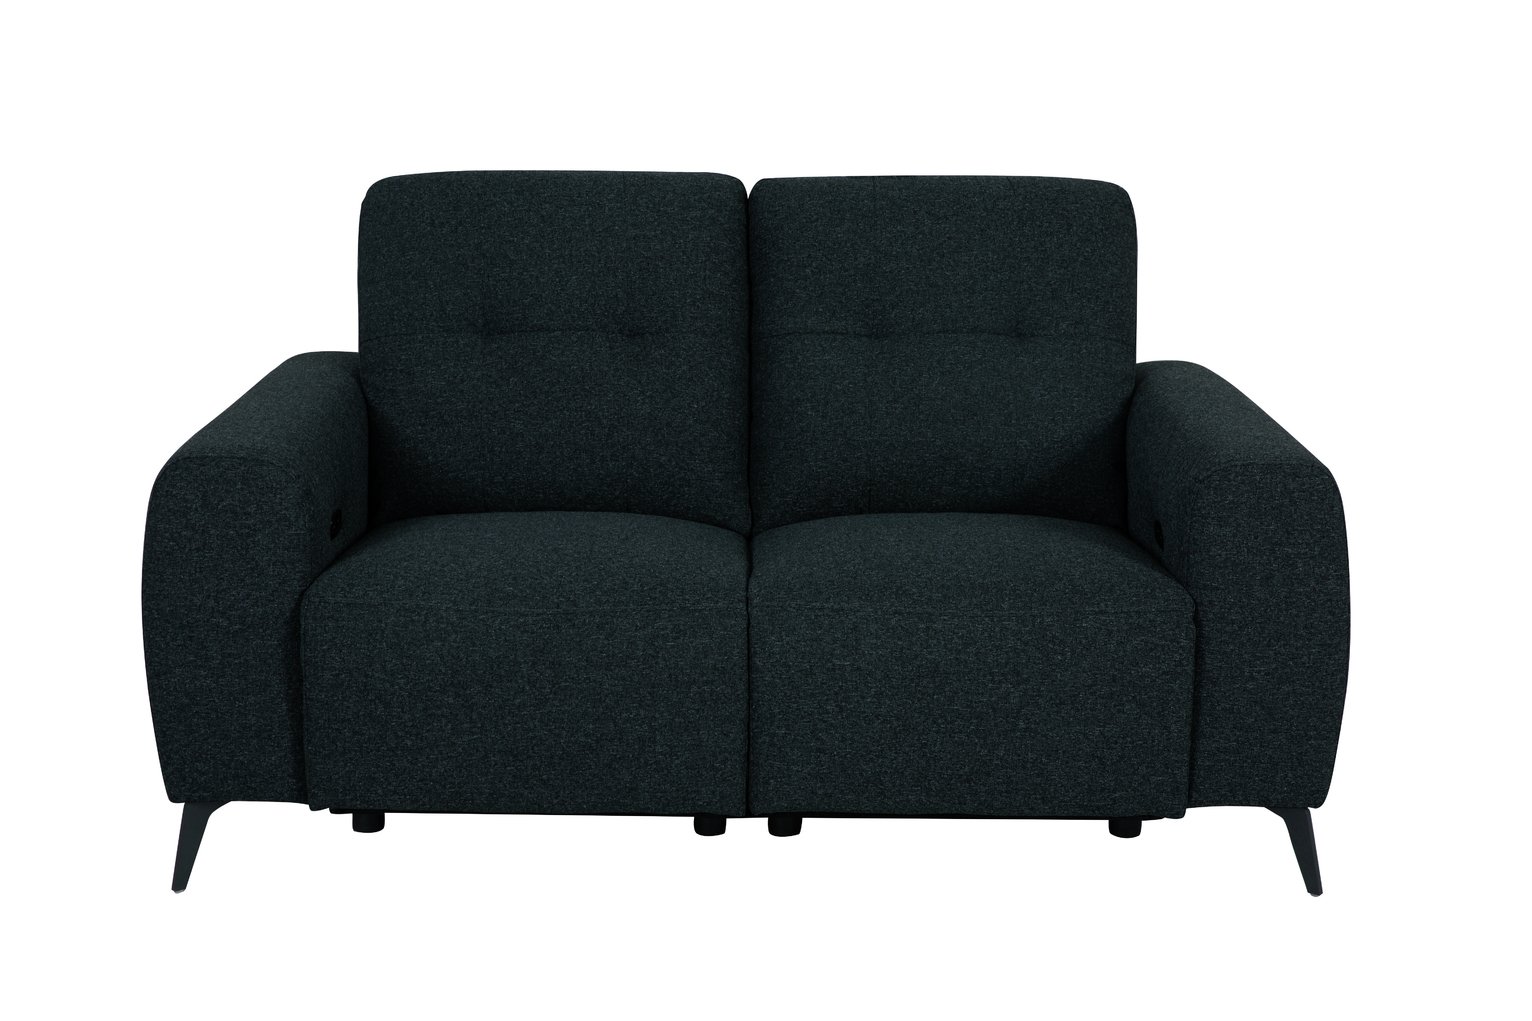 Habitat Ghost 2 Seater Fabric Recliner Sofa Review